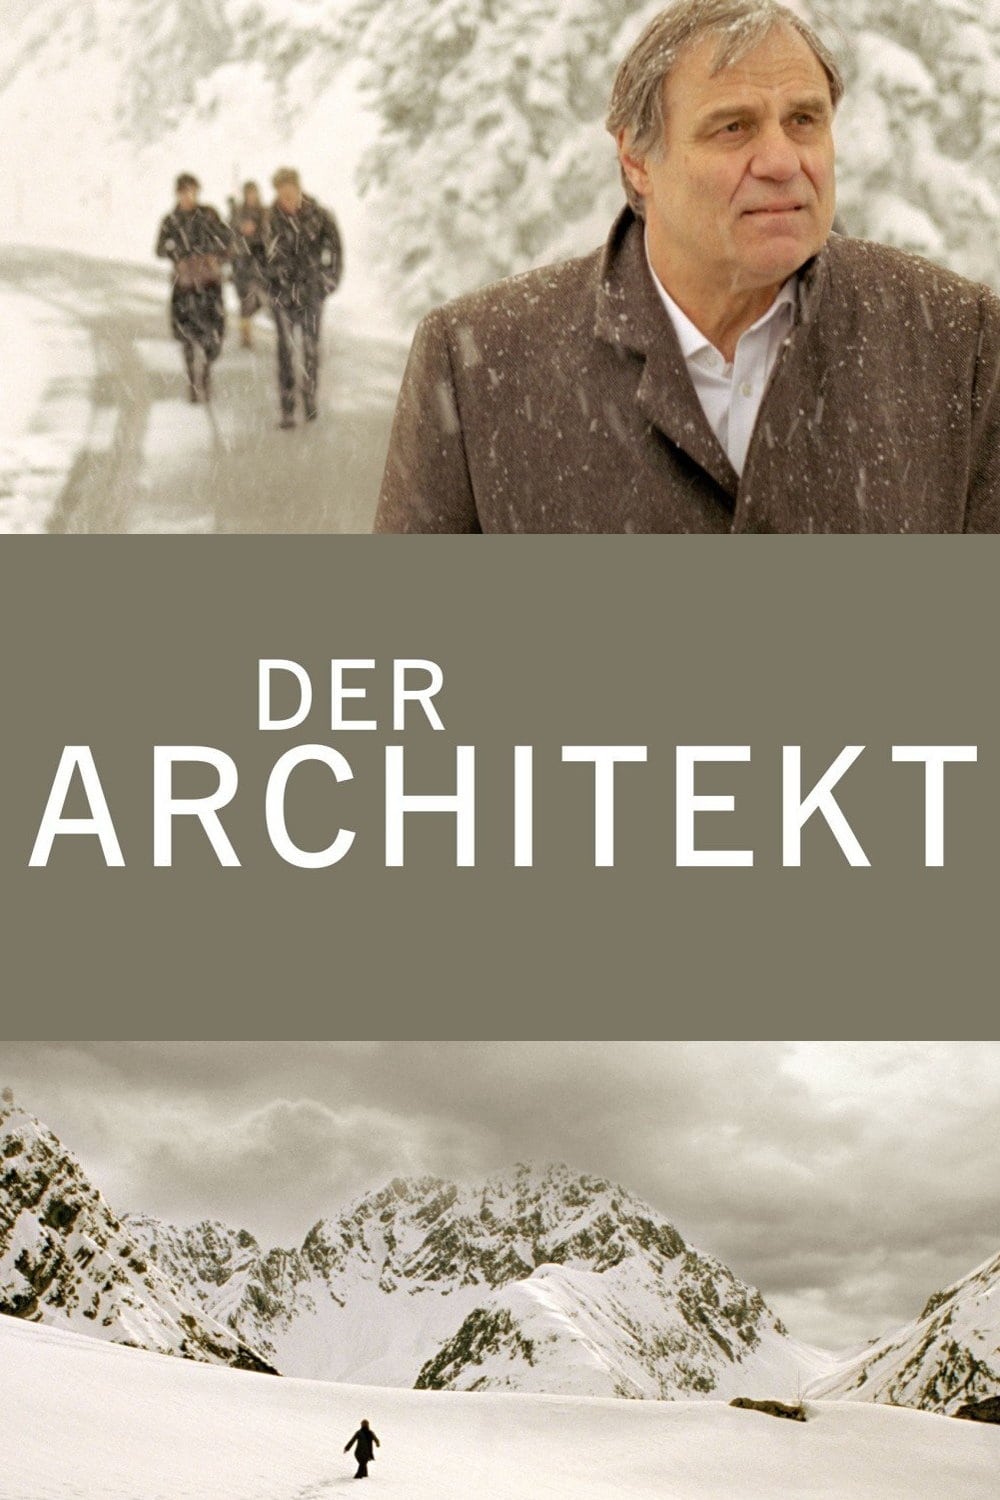 The Architect (2008)